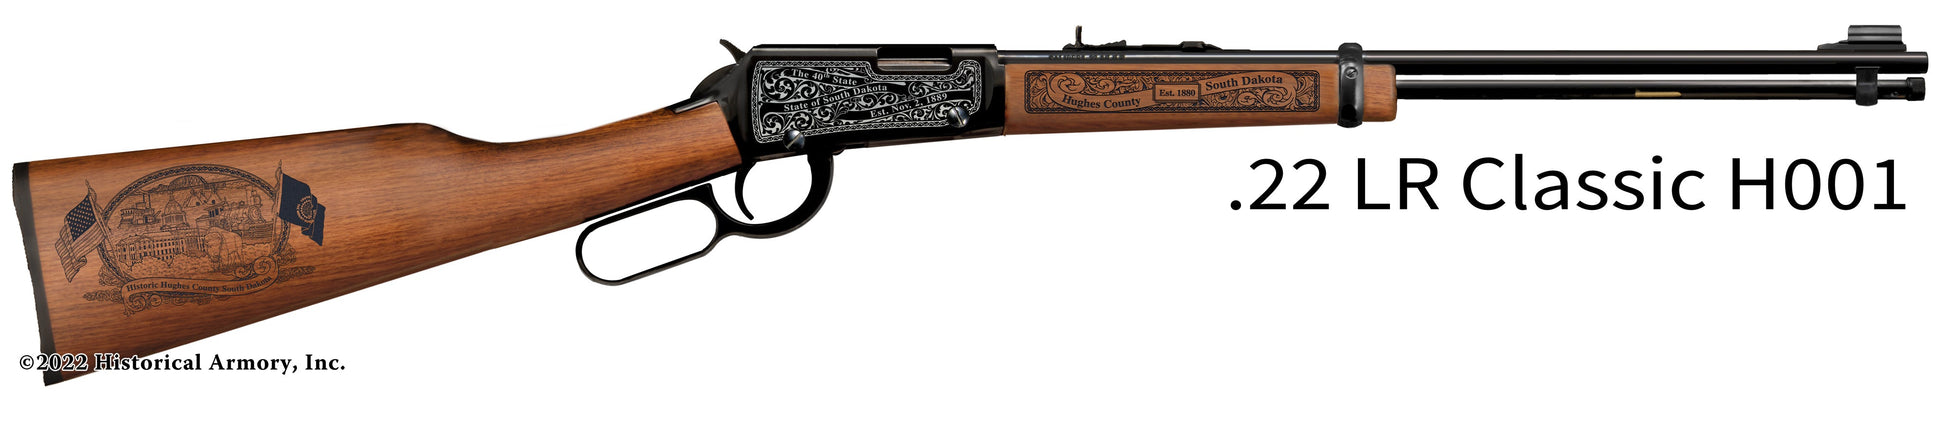 Hughes County South Dakota Engraved Henry H001 Rifle